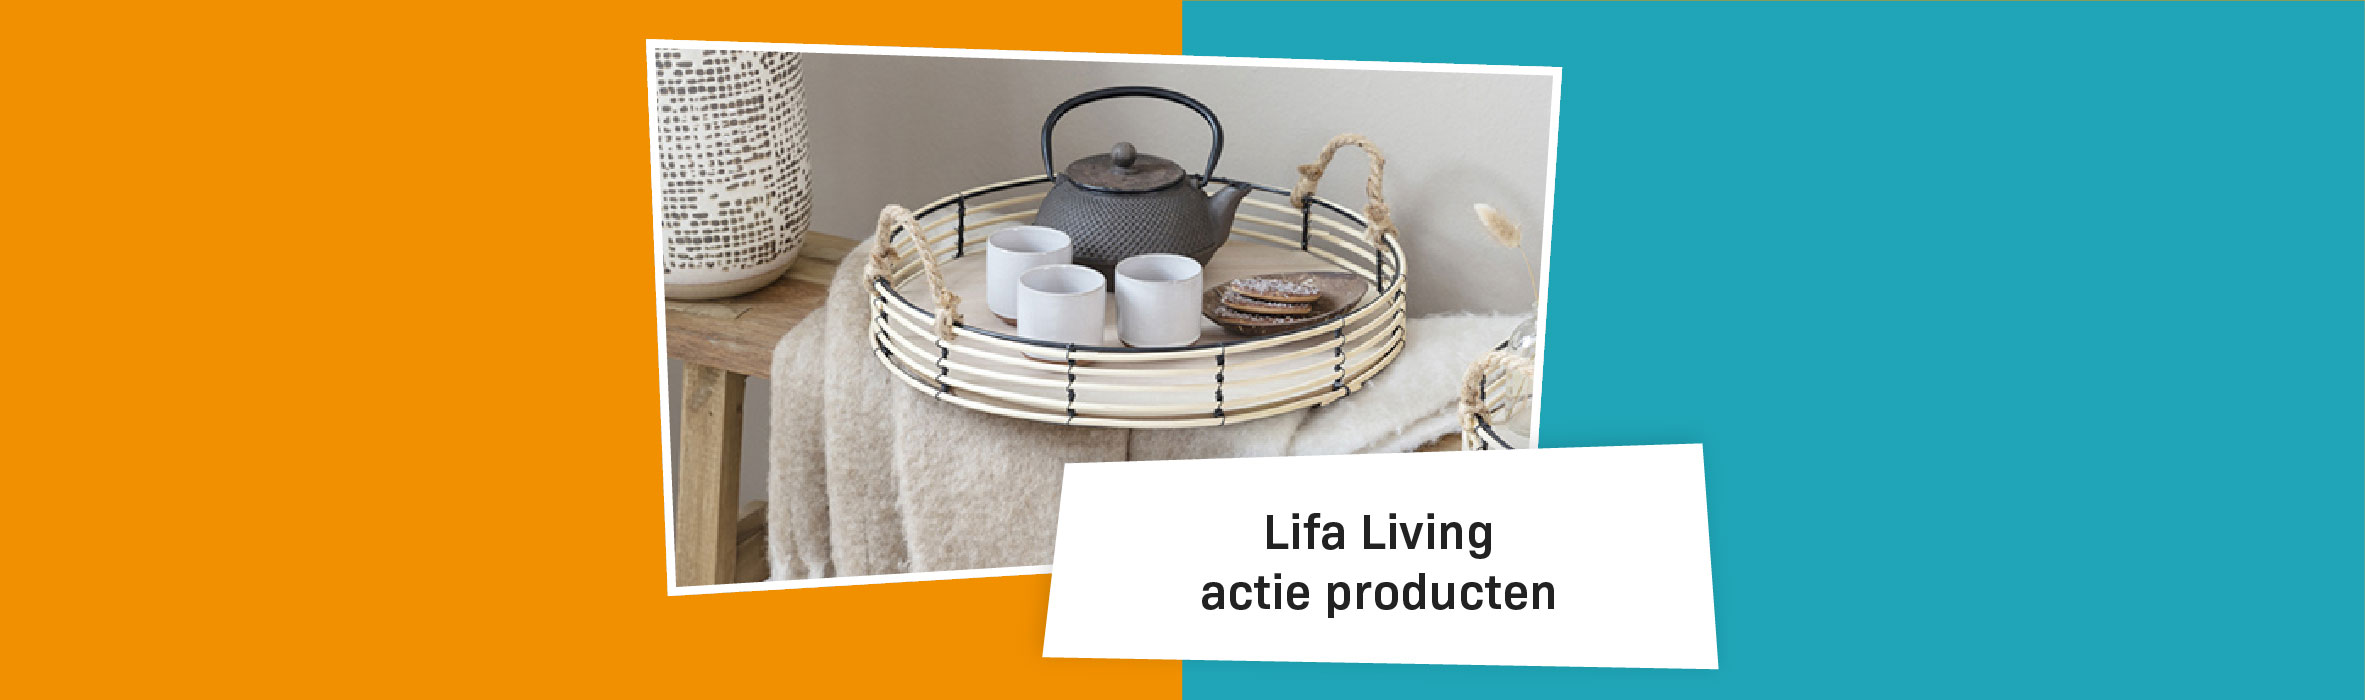 Productos de promoción de Lifa Living